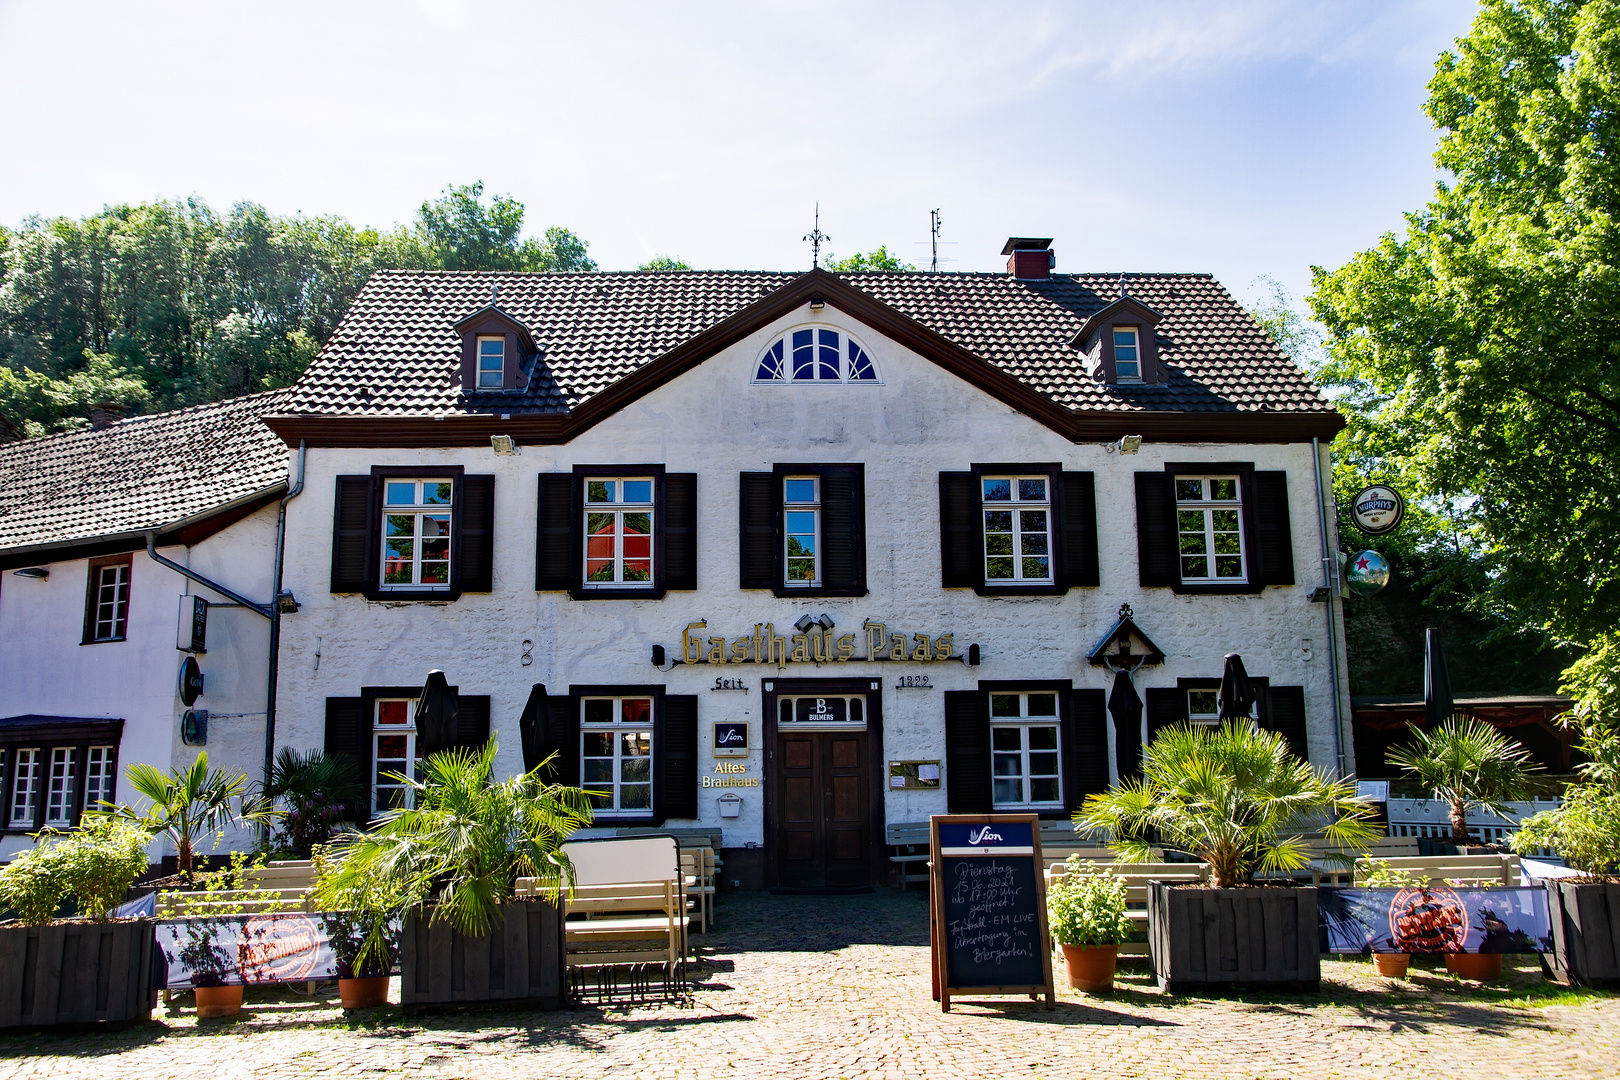 Gasthaus Paas